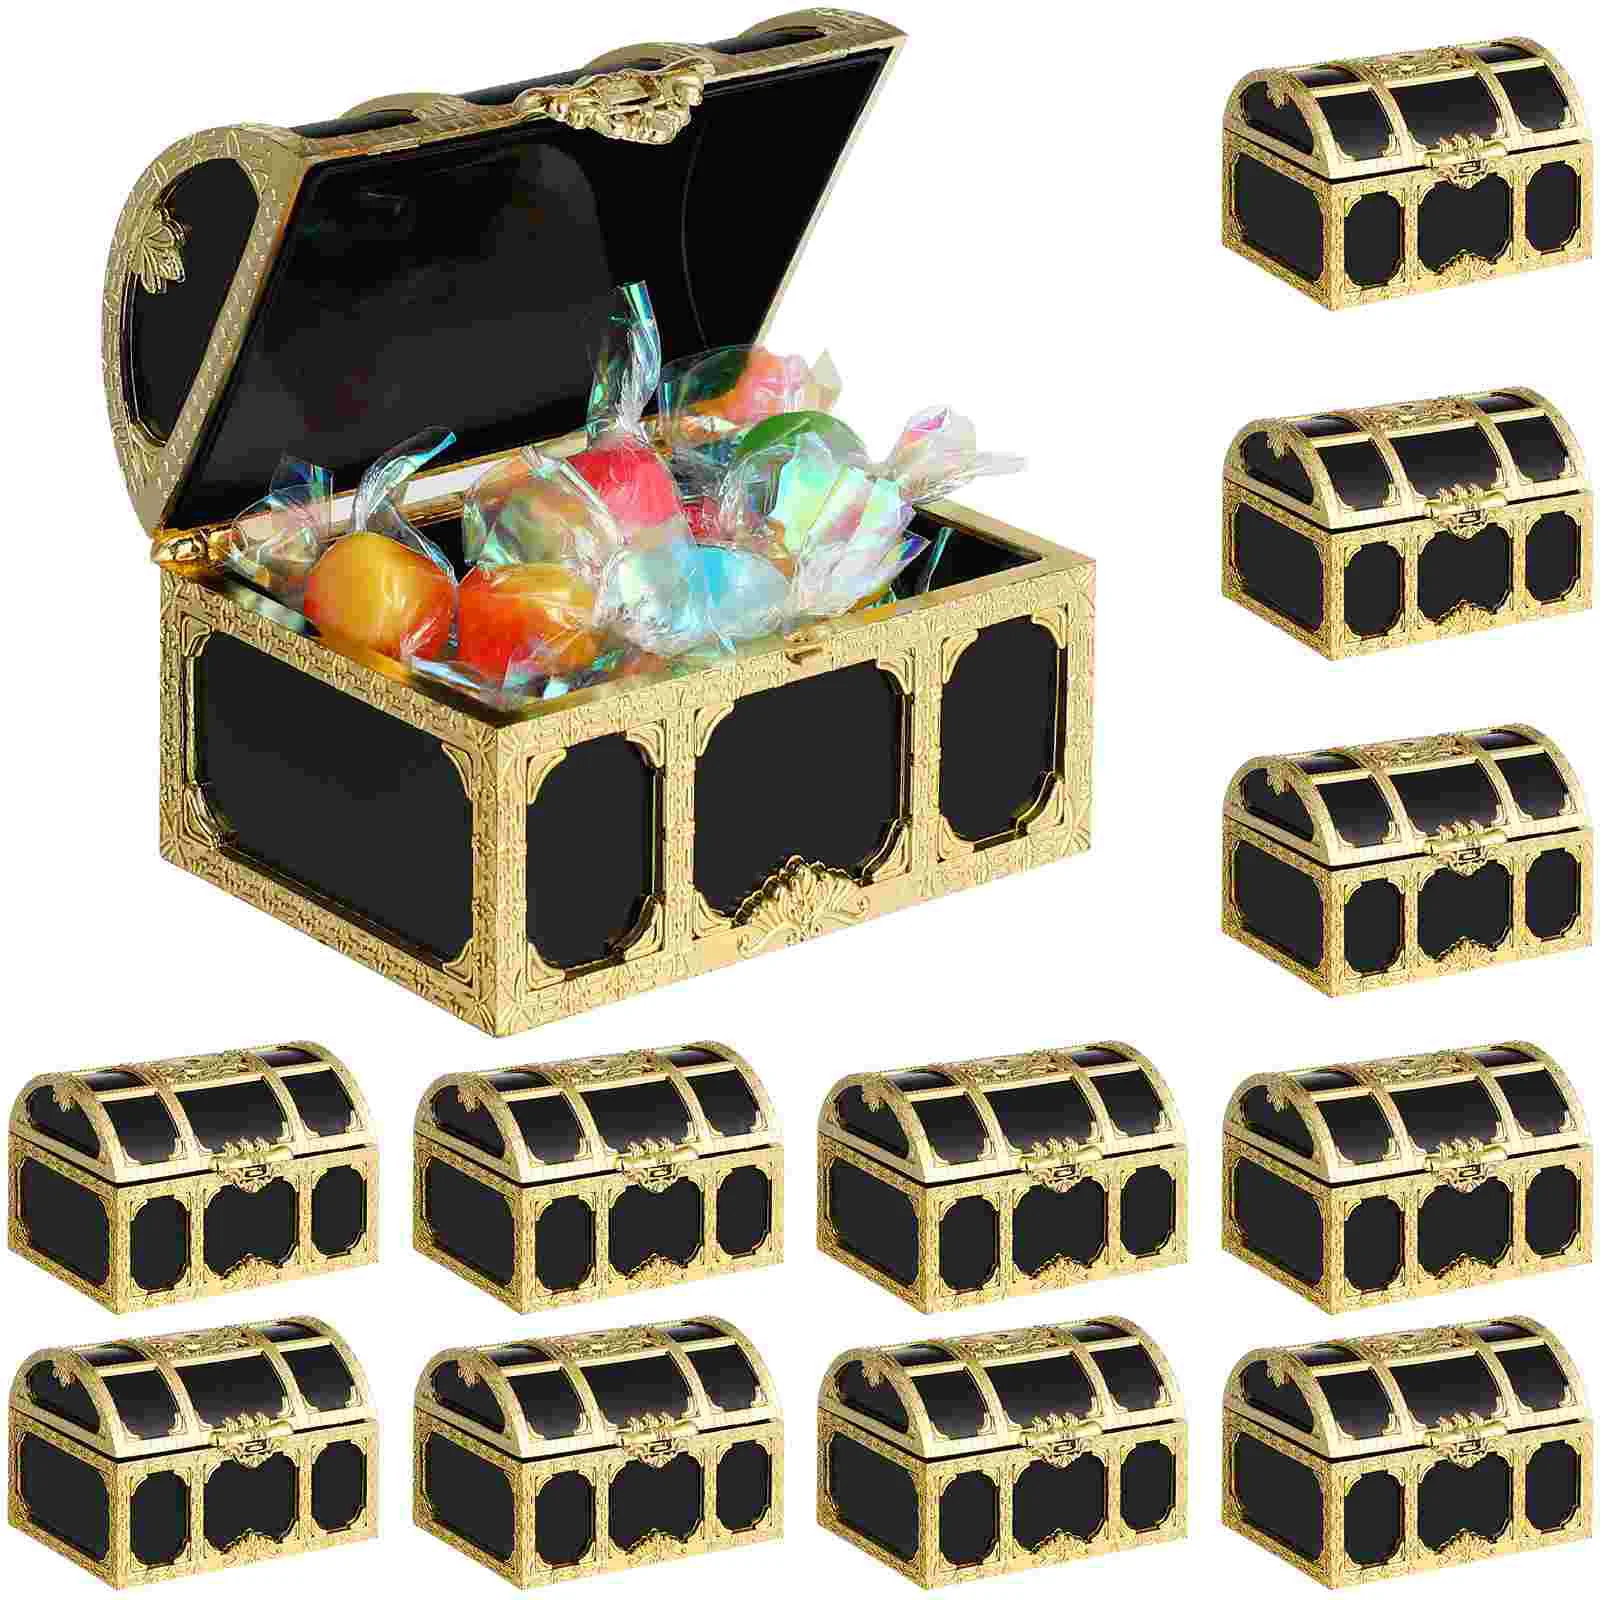 

12 Pcs Kids Toy Treasure Sugar Box Holder Cake Pirate Chests Prizes Case Child